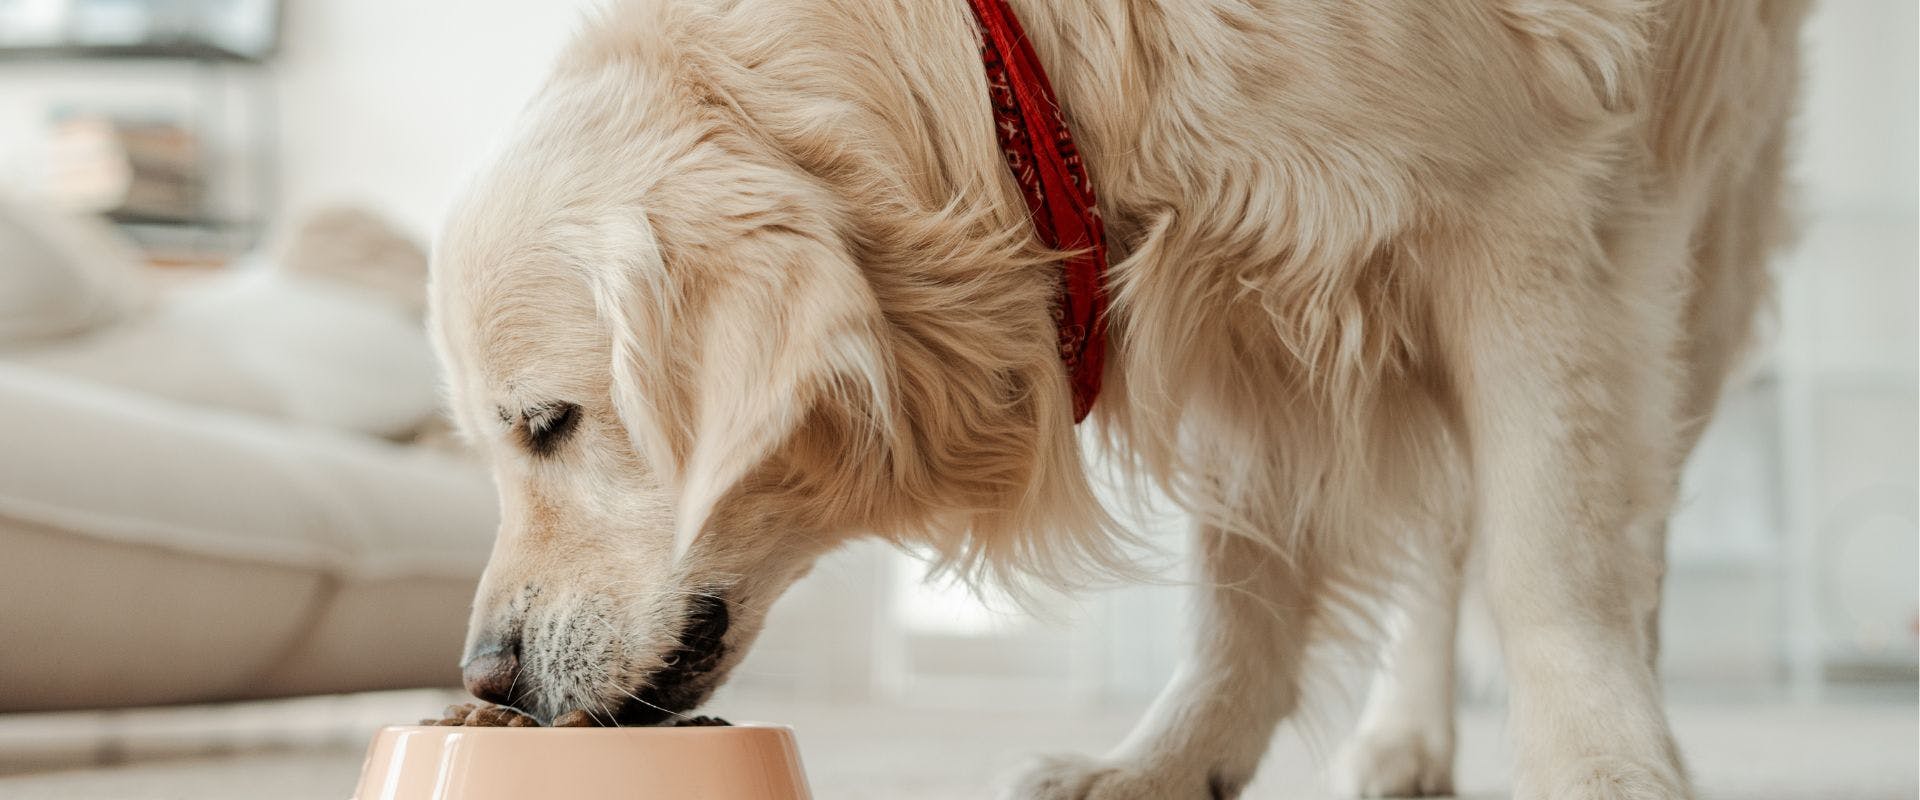 Golden Retriever eating from a dog bowl